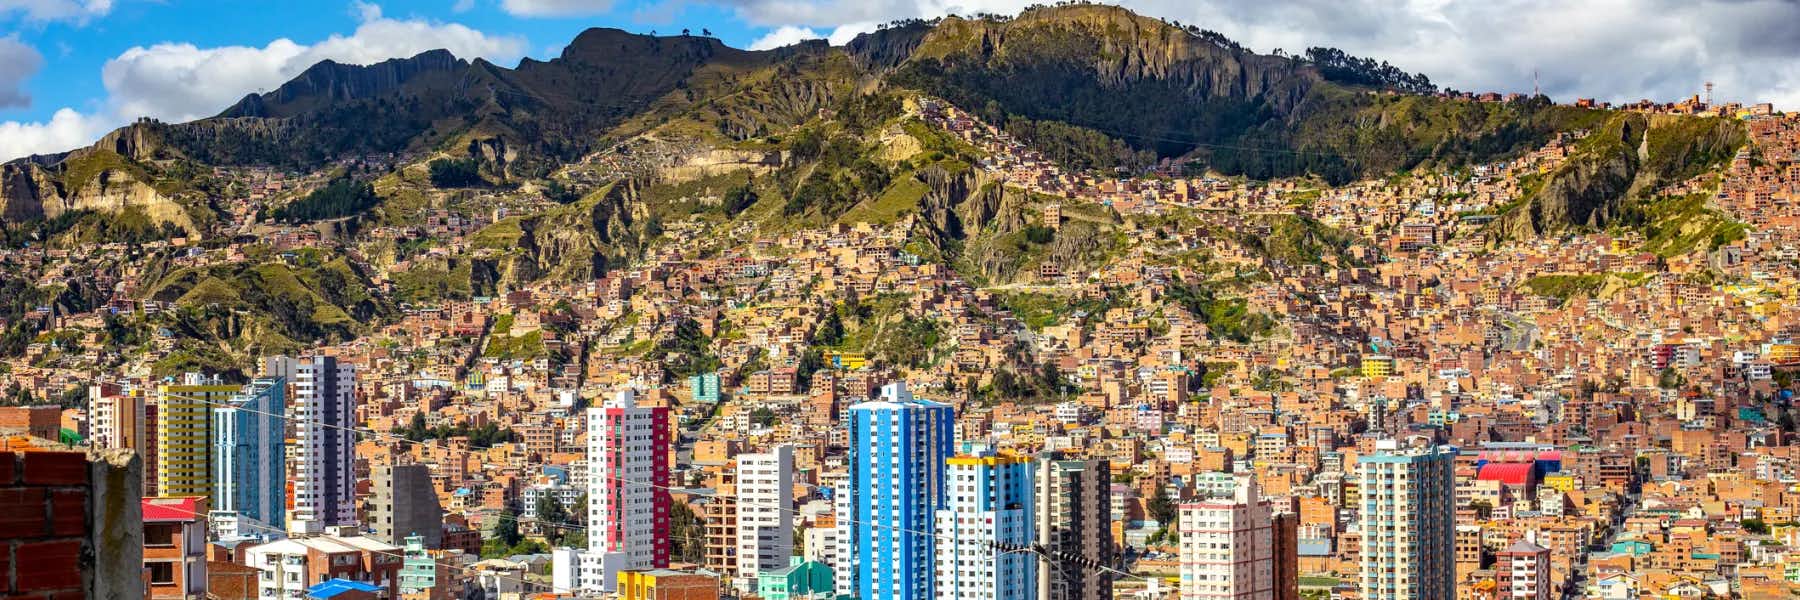 The Economy in Bolivia